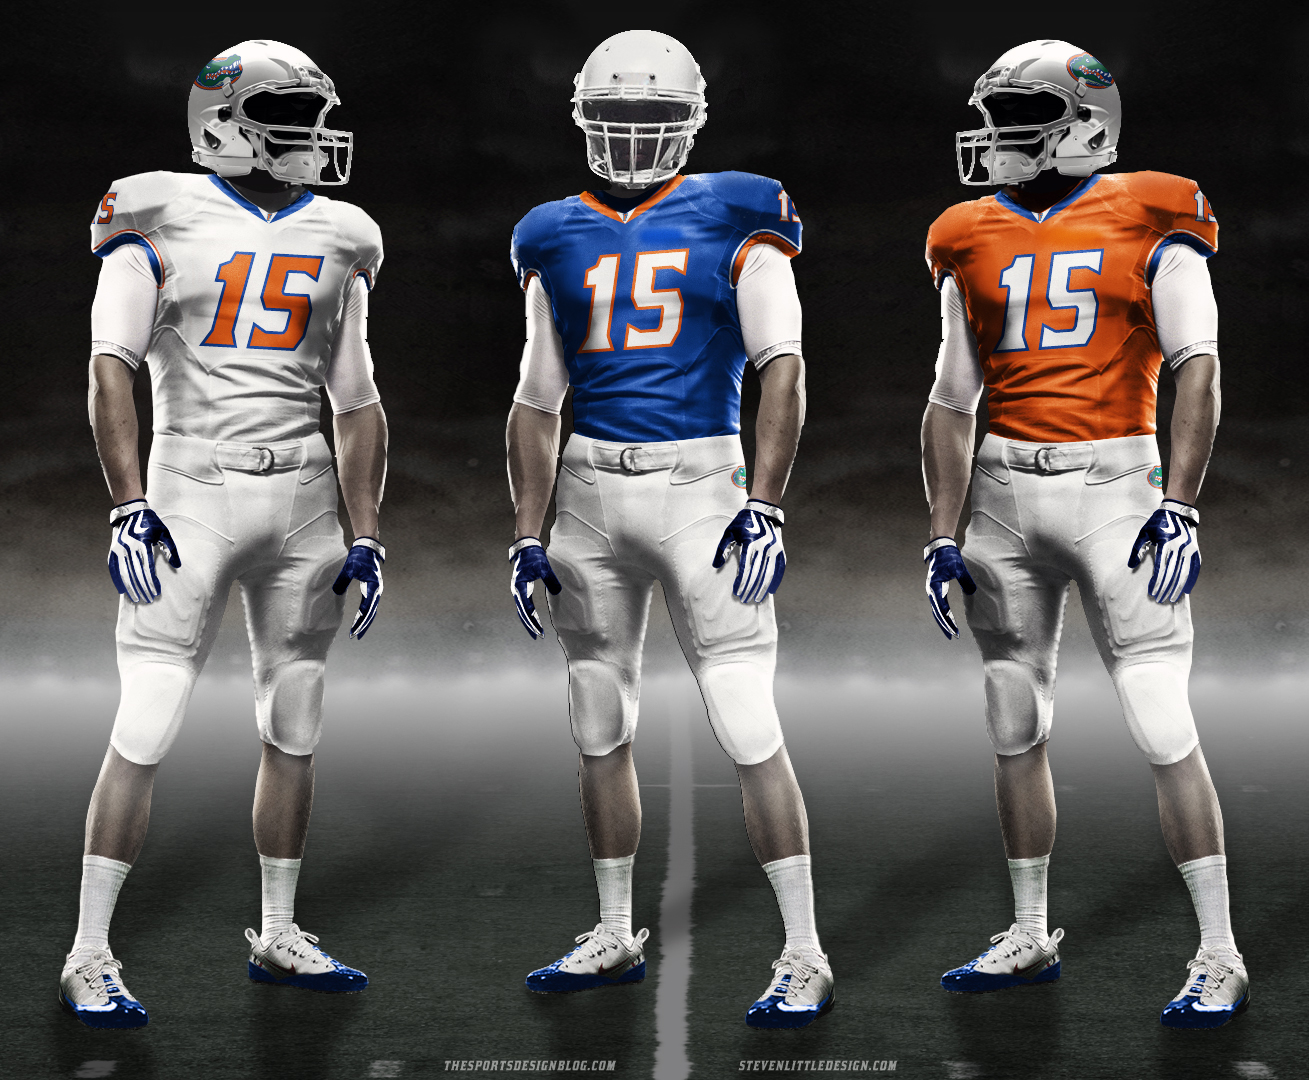 The Sports Design Blog » Uniform Concept – Florida Football